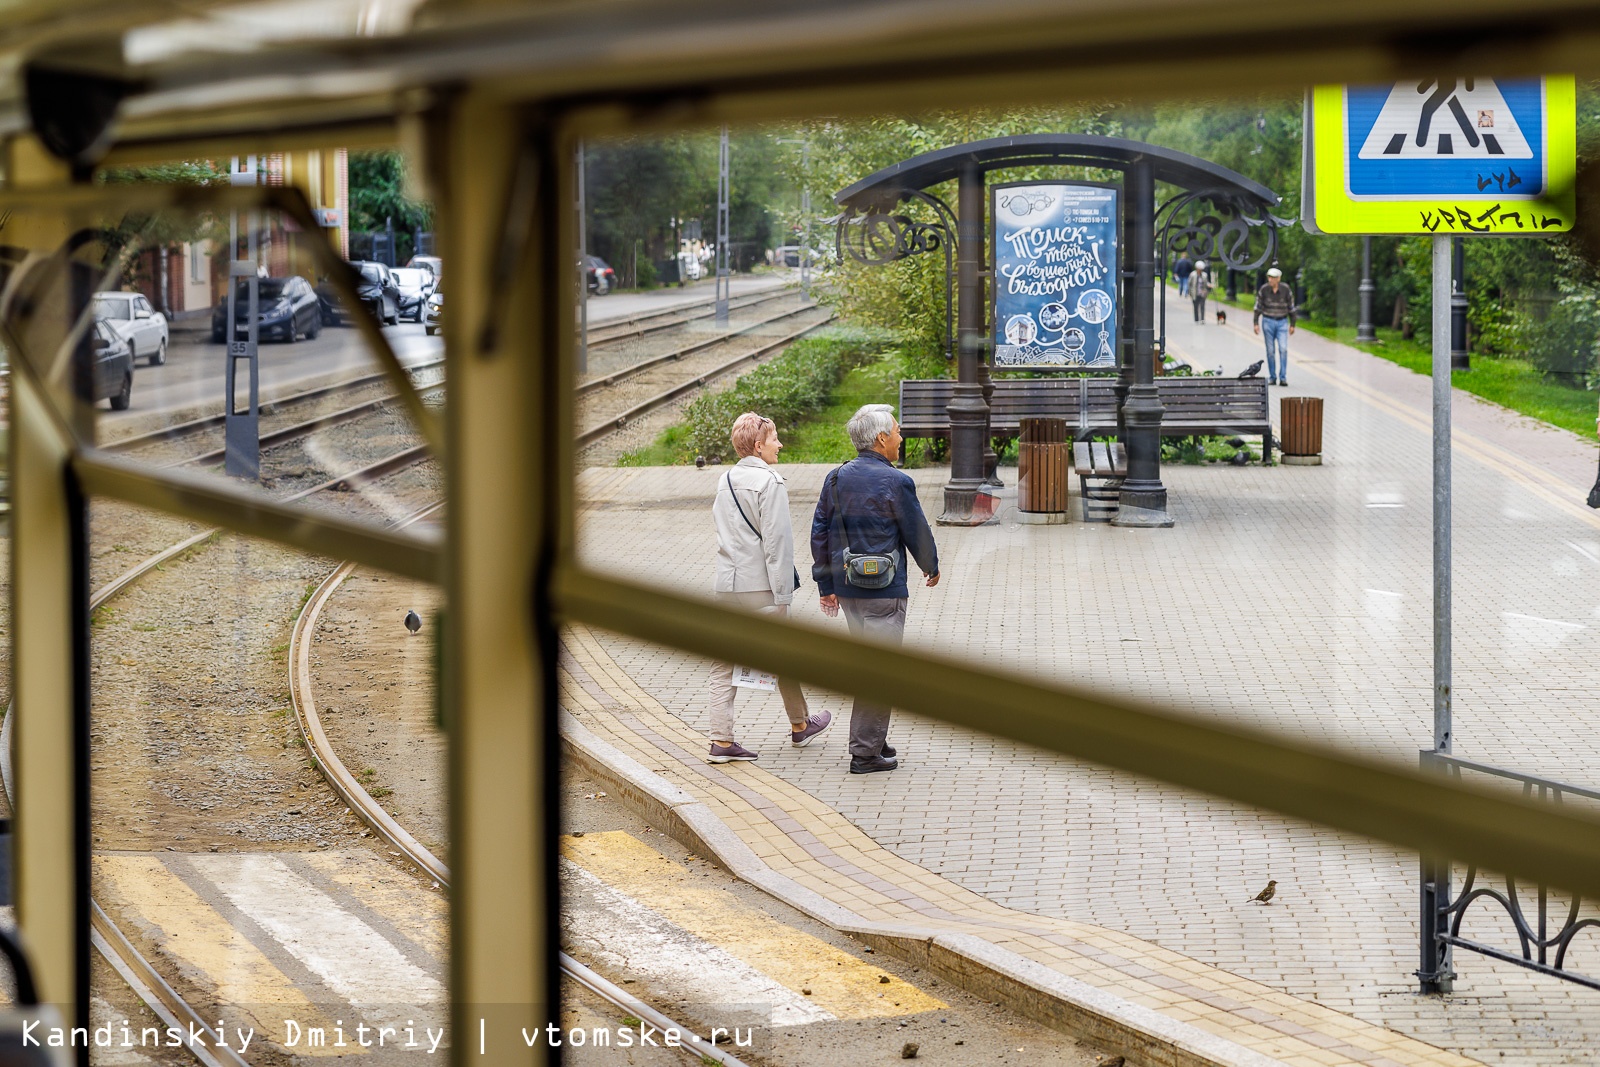 томский трамвай 349 фото с камеры